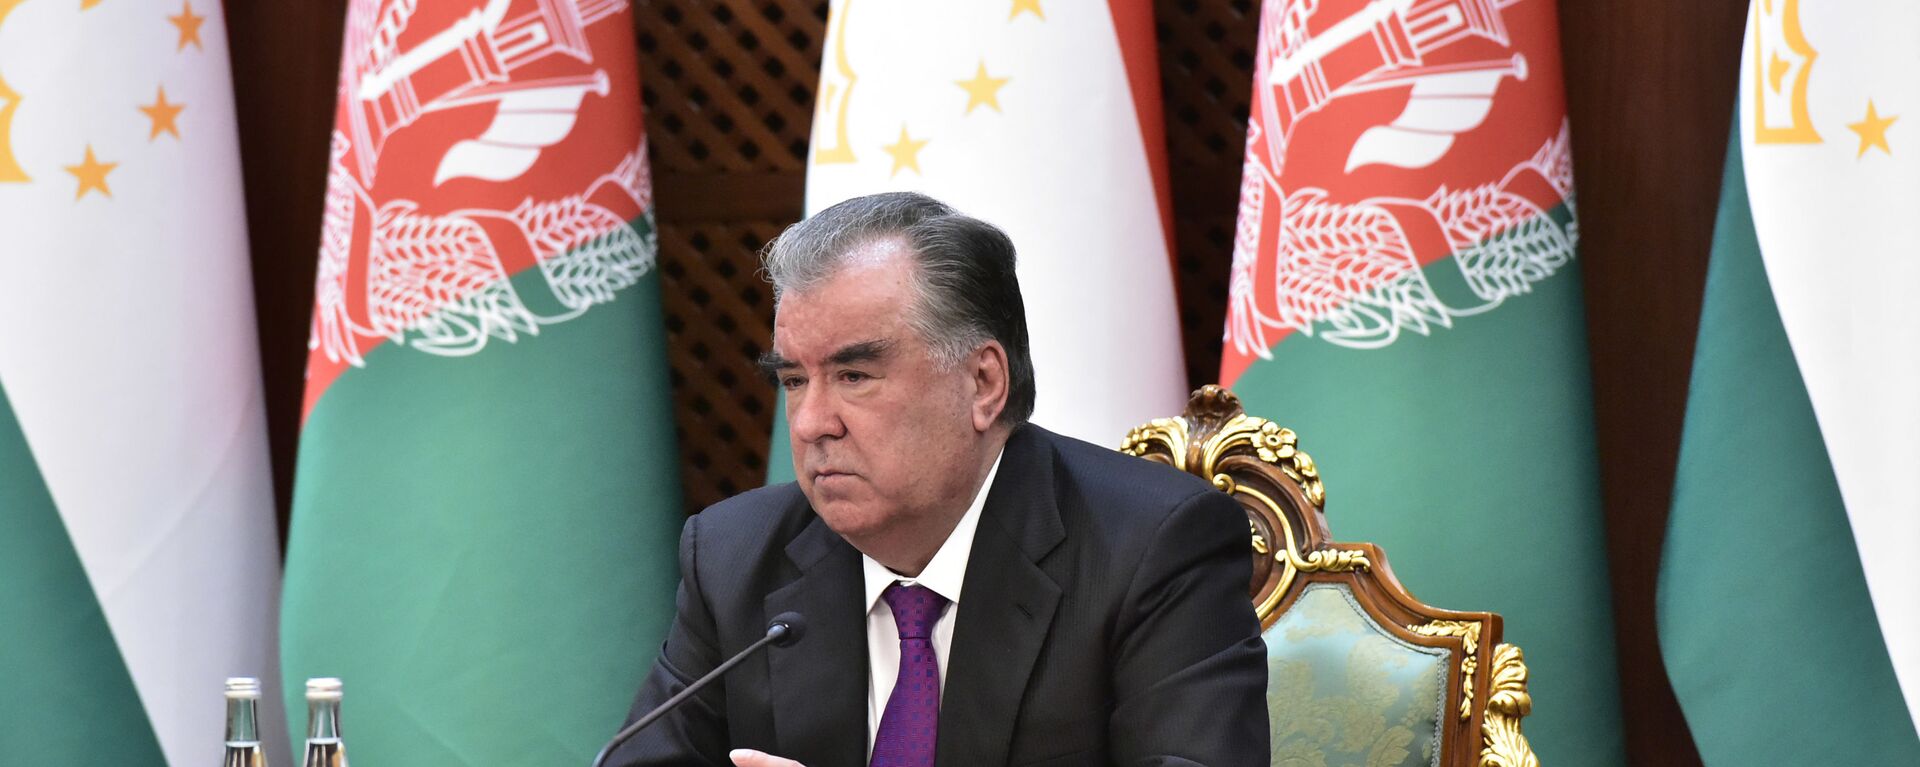 Официальная встреча президента Афганистана Ашрафа Гани в Душанбе  - Sputnik Таджикистан, 1920, 17.05.2021